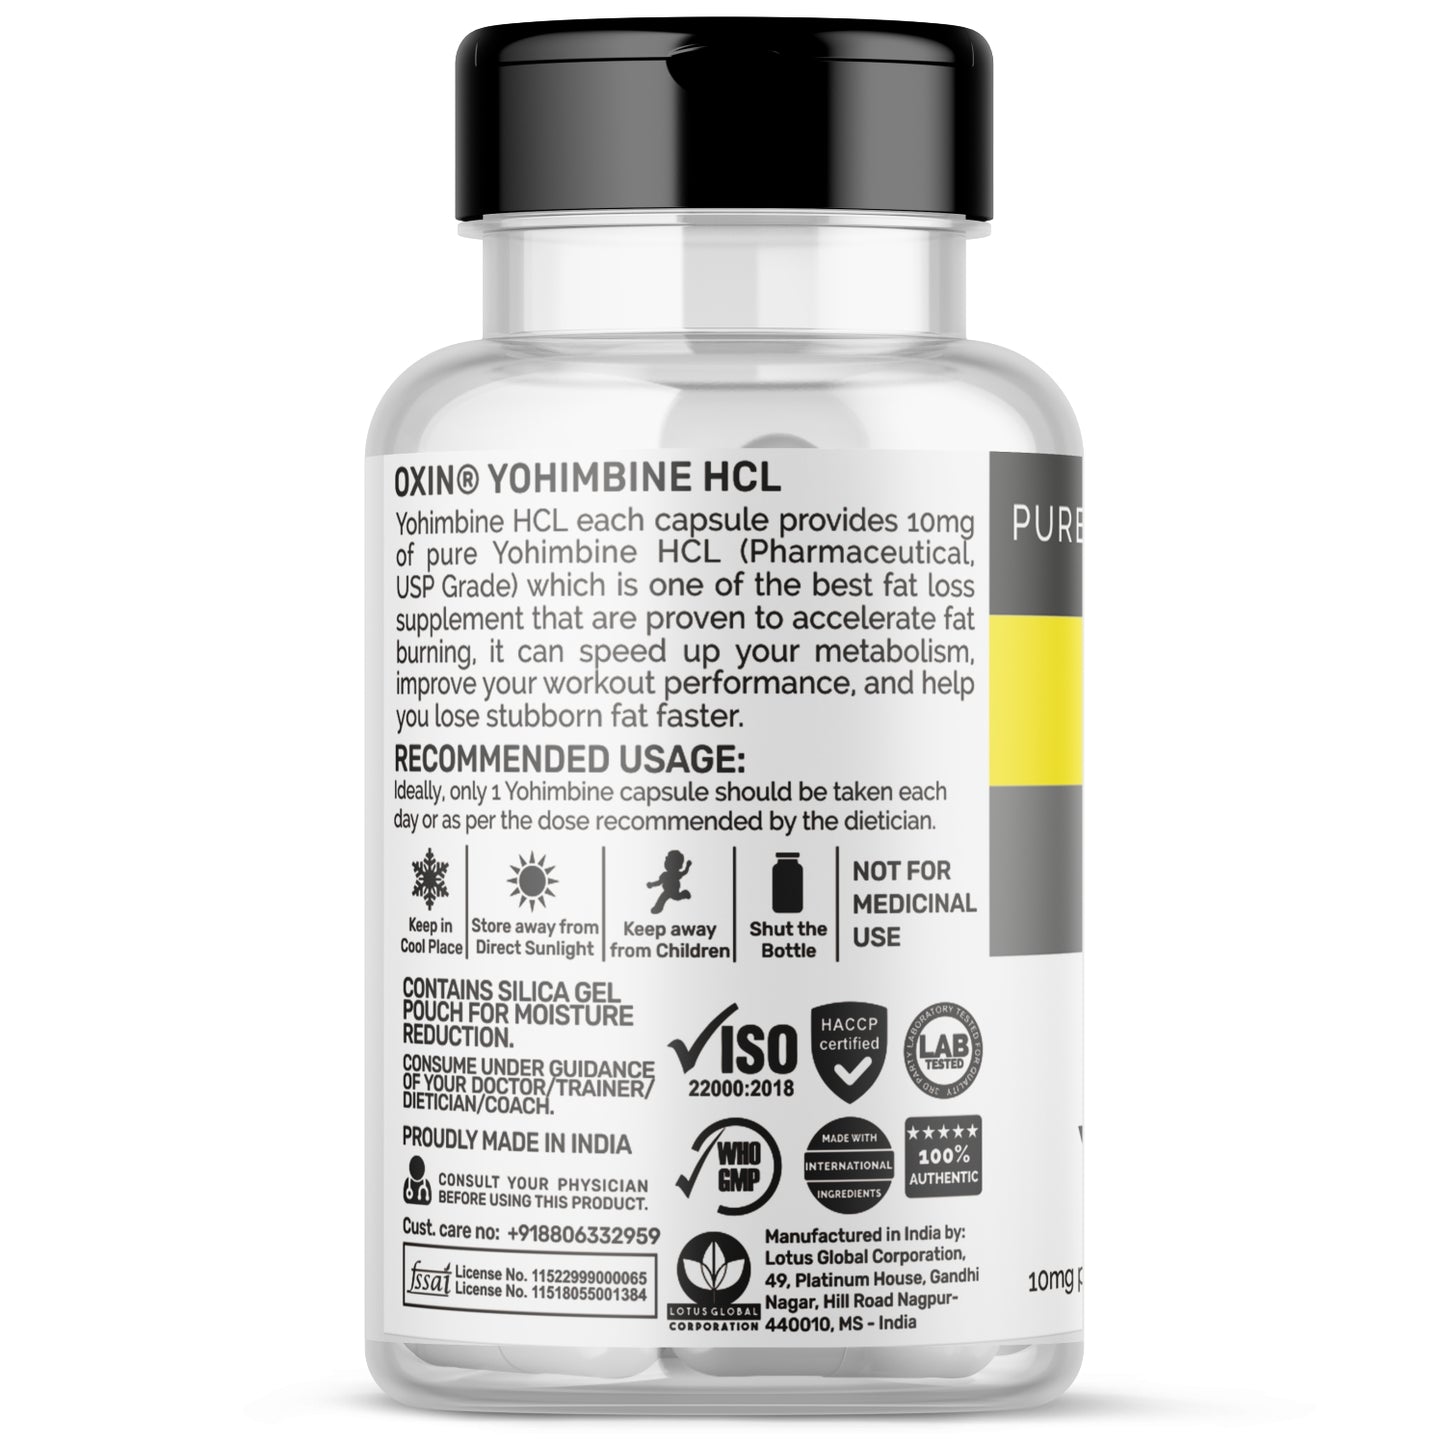 Oxin Nutrition® Yohimbine HCL 10mg Potent Fat Burner - PRO GRADE